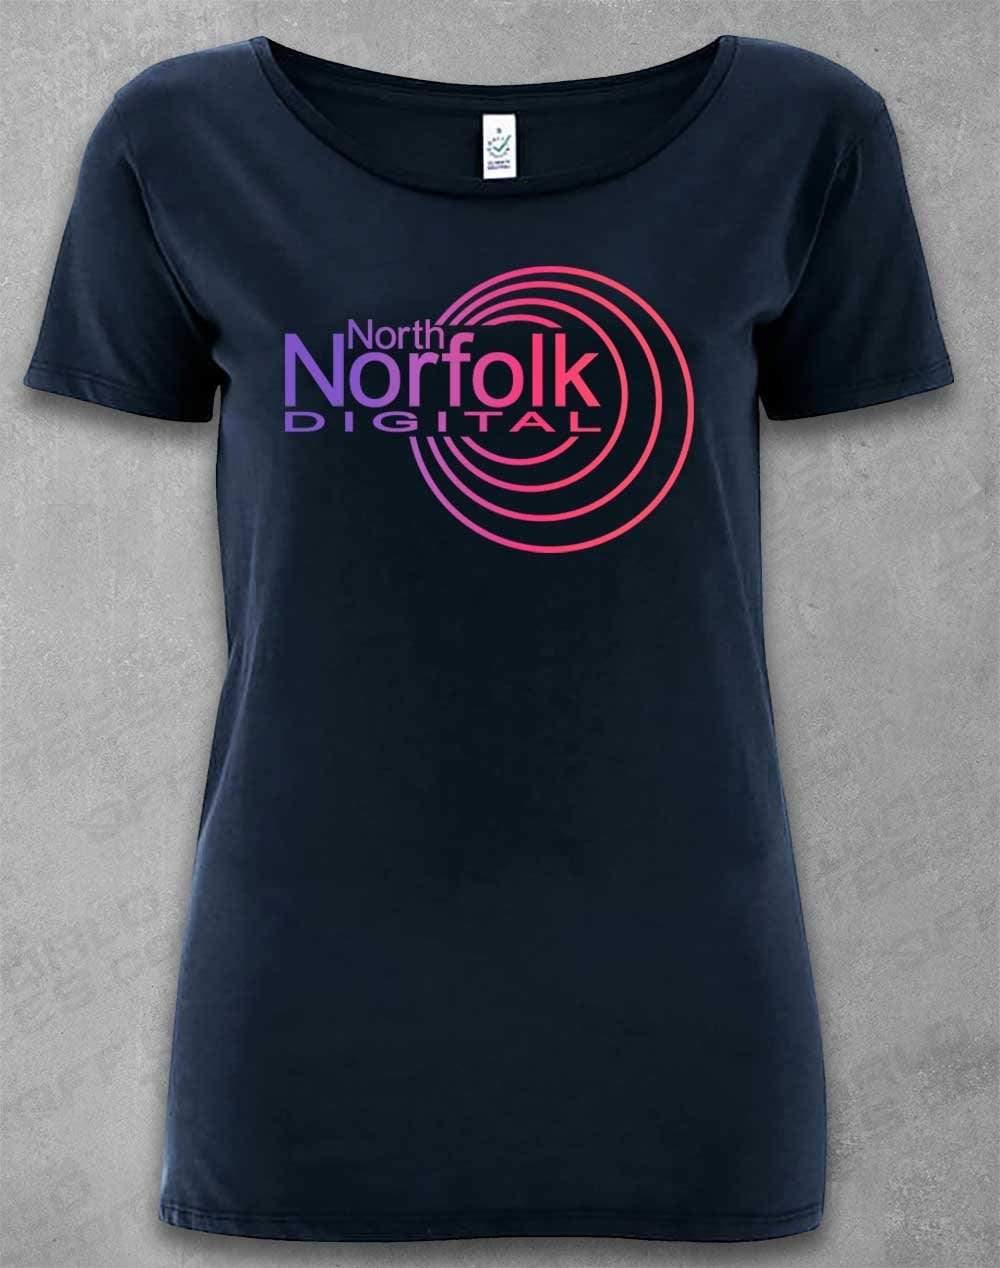 DELUXE North Norfolk Digital Organic Scoop Neck T-Shirt 8-10 / Navy  - Off World Tees